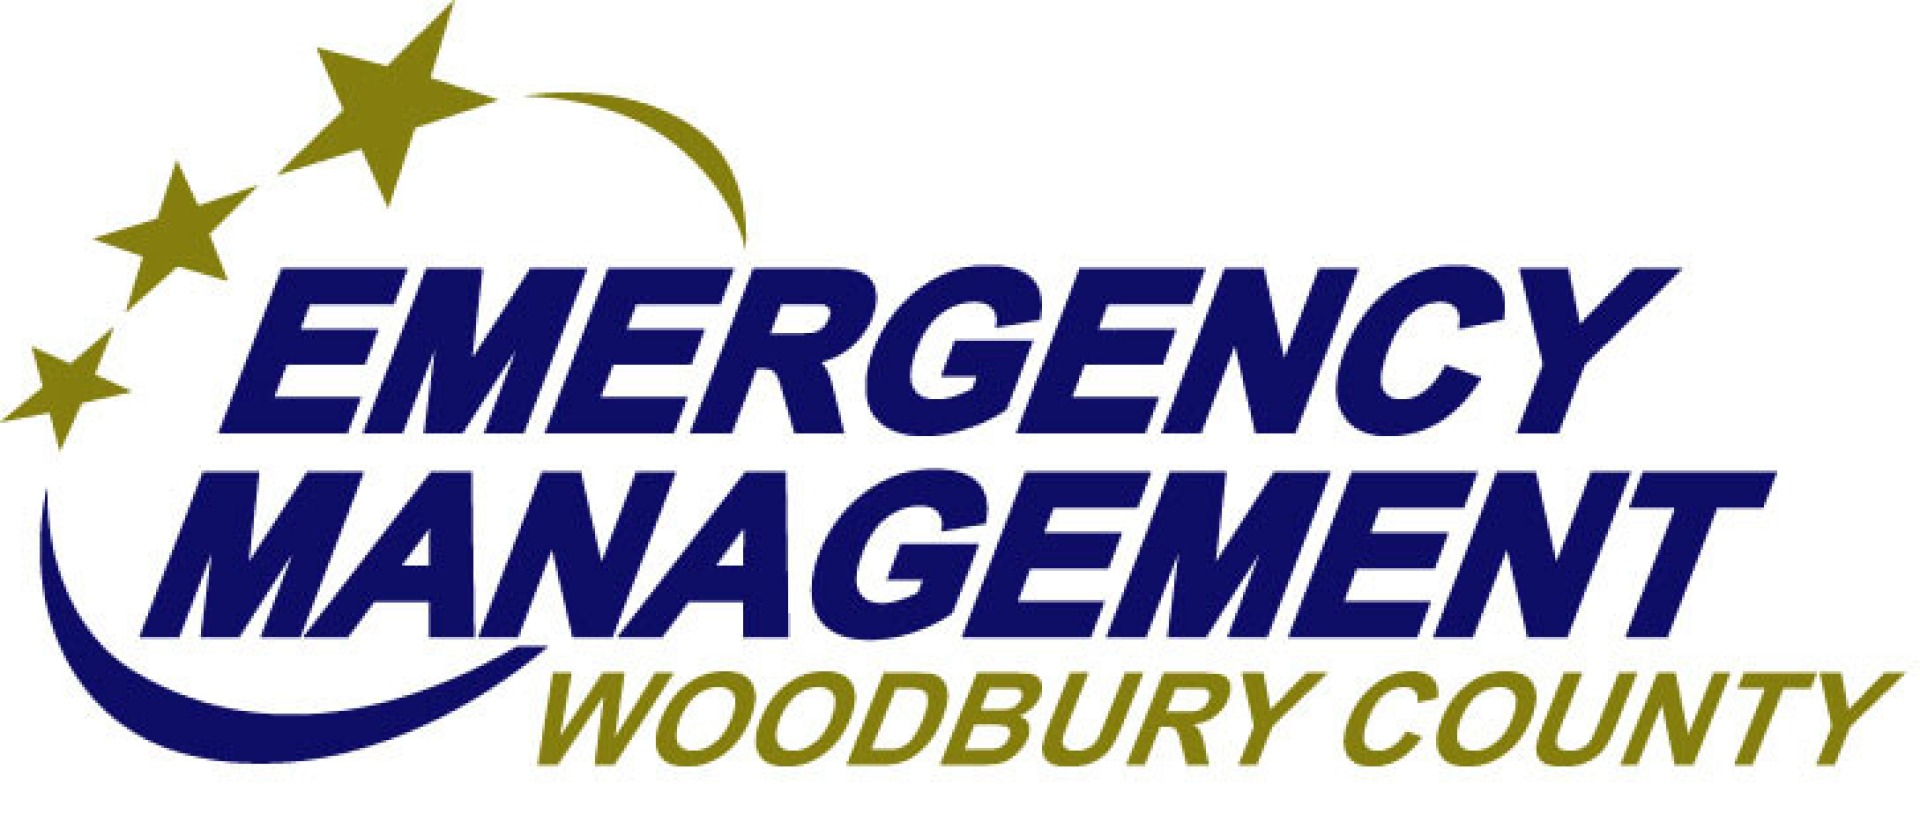 Woodbury County Emergency Management department logo.